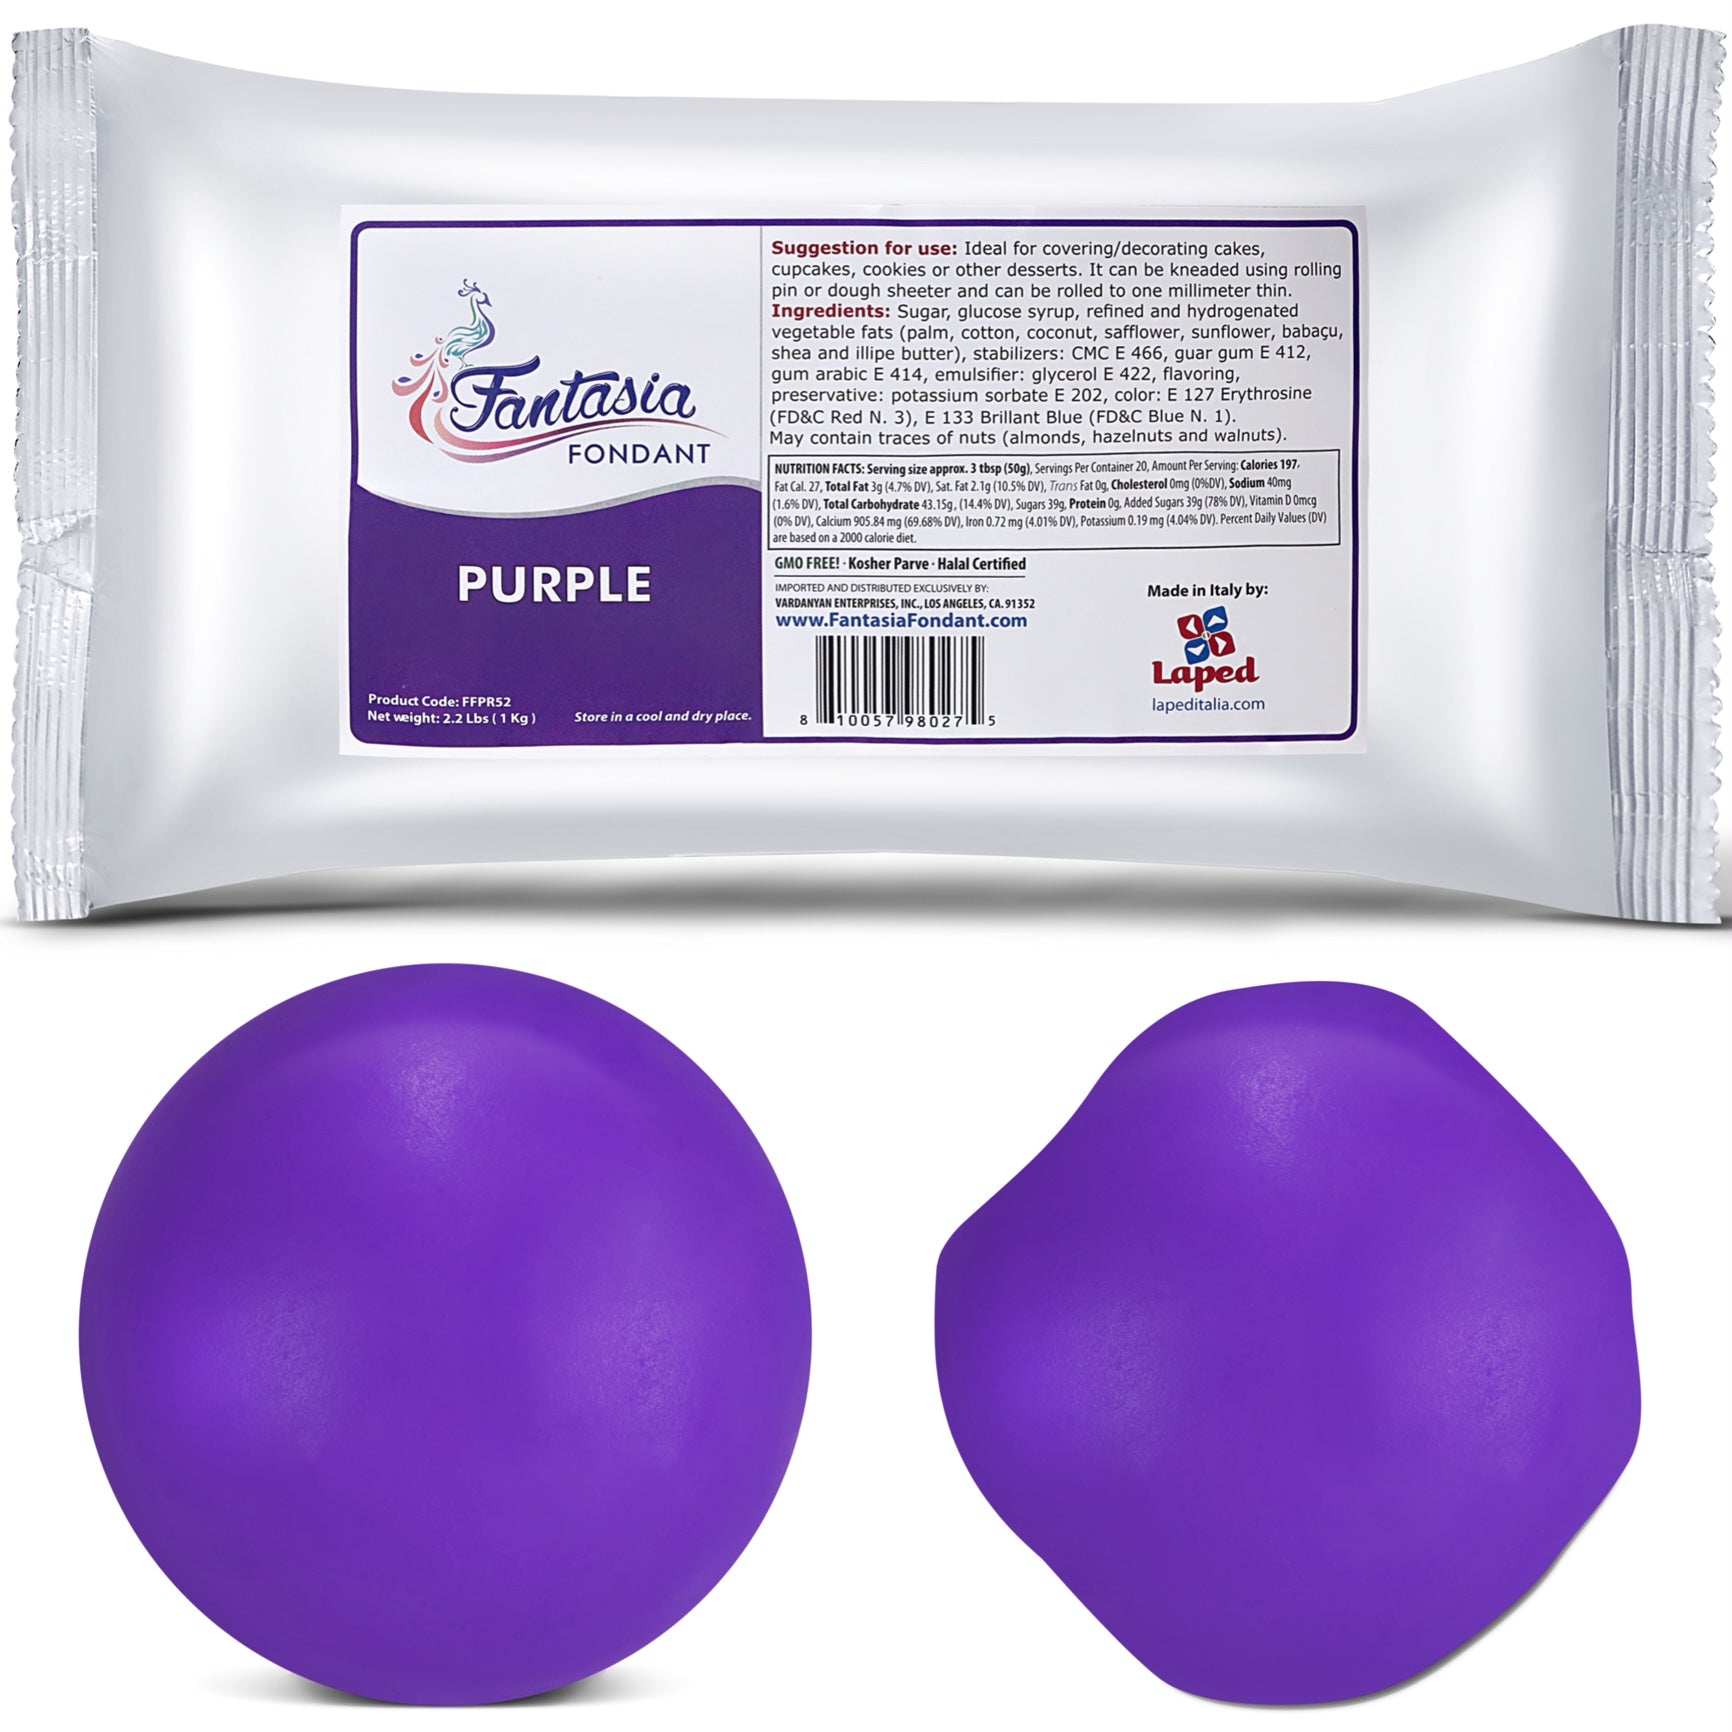 Fantasia Fondant - Purple